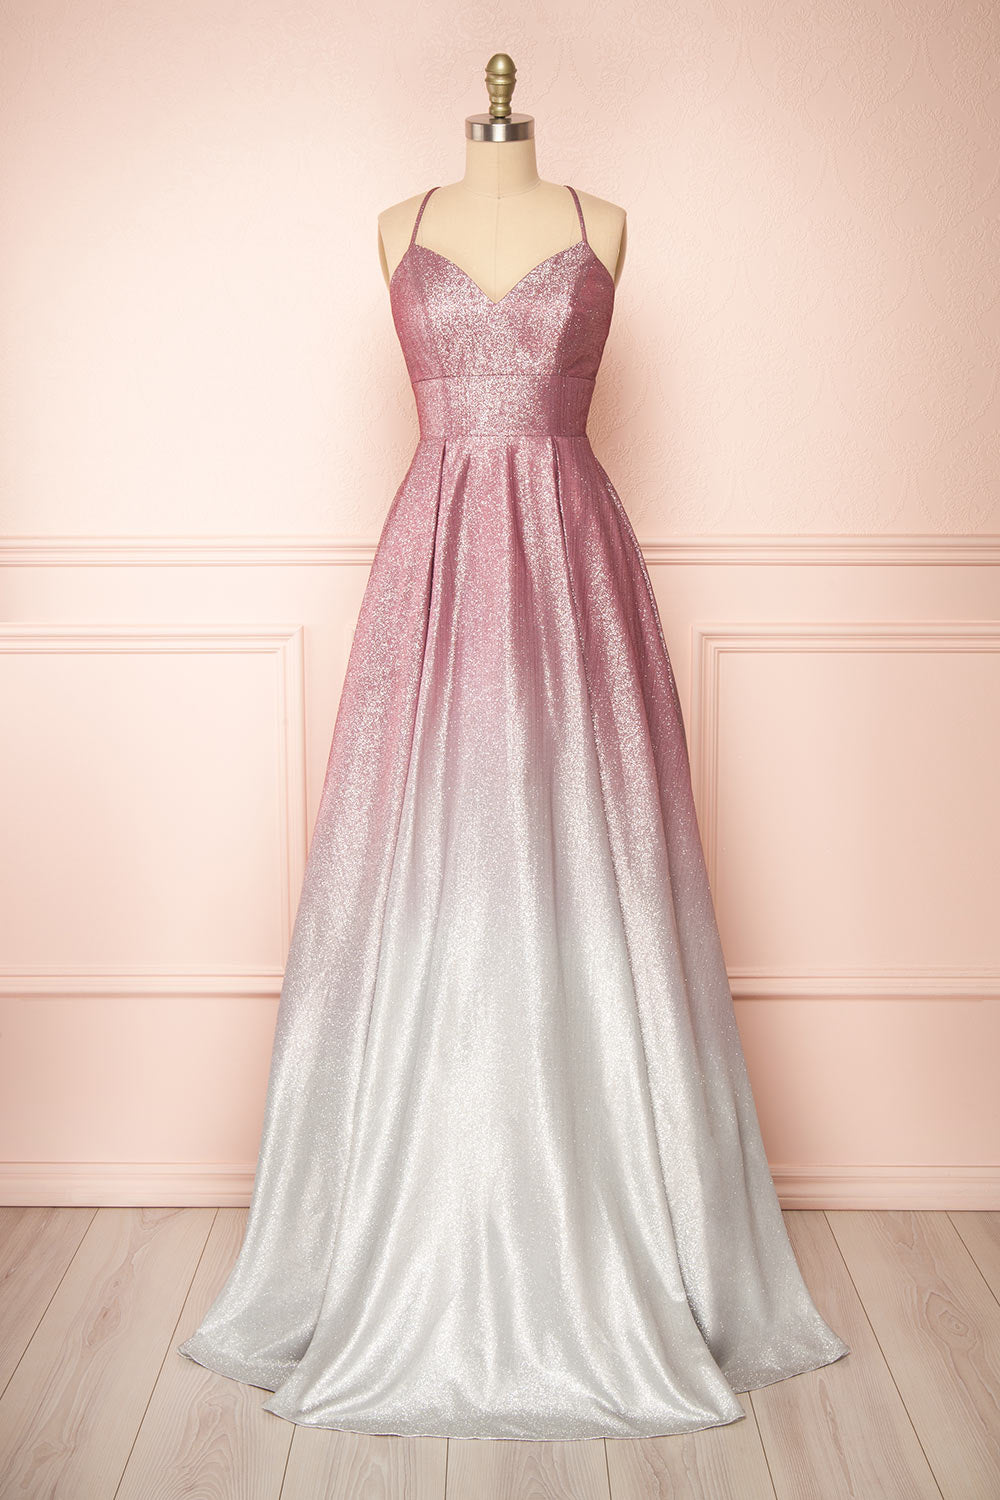 Renesmee Mauve Sparkly Gradient Maxi Dress | Boutique 1861 front view 